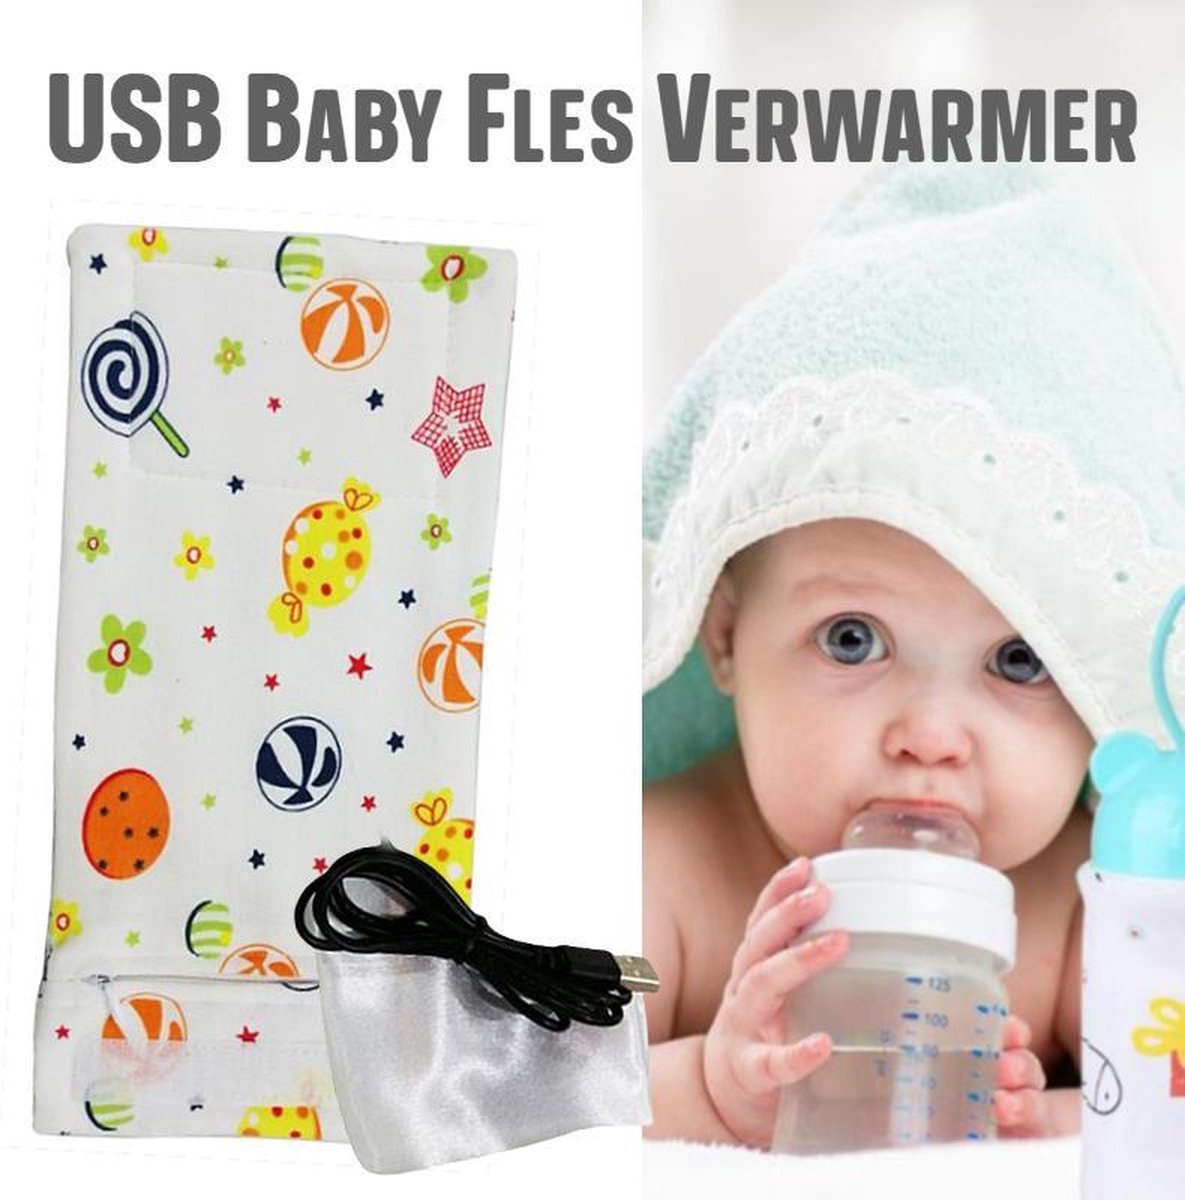 Allernieuwste USB Baby Fles Warmer model Lollie - Heater - Reisaccessoire - Draagbaar - Klittenband - Kleur